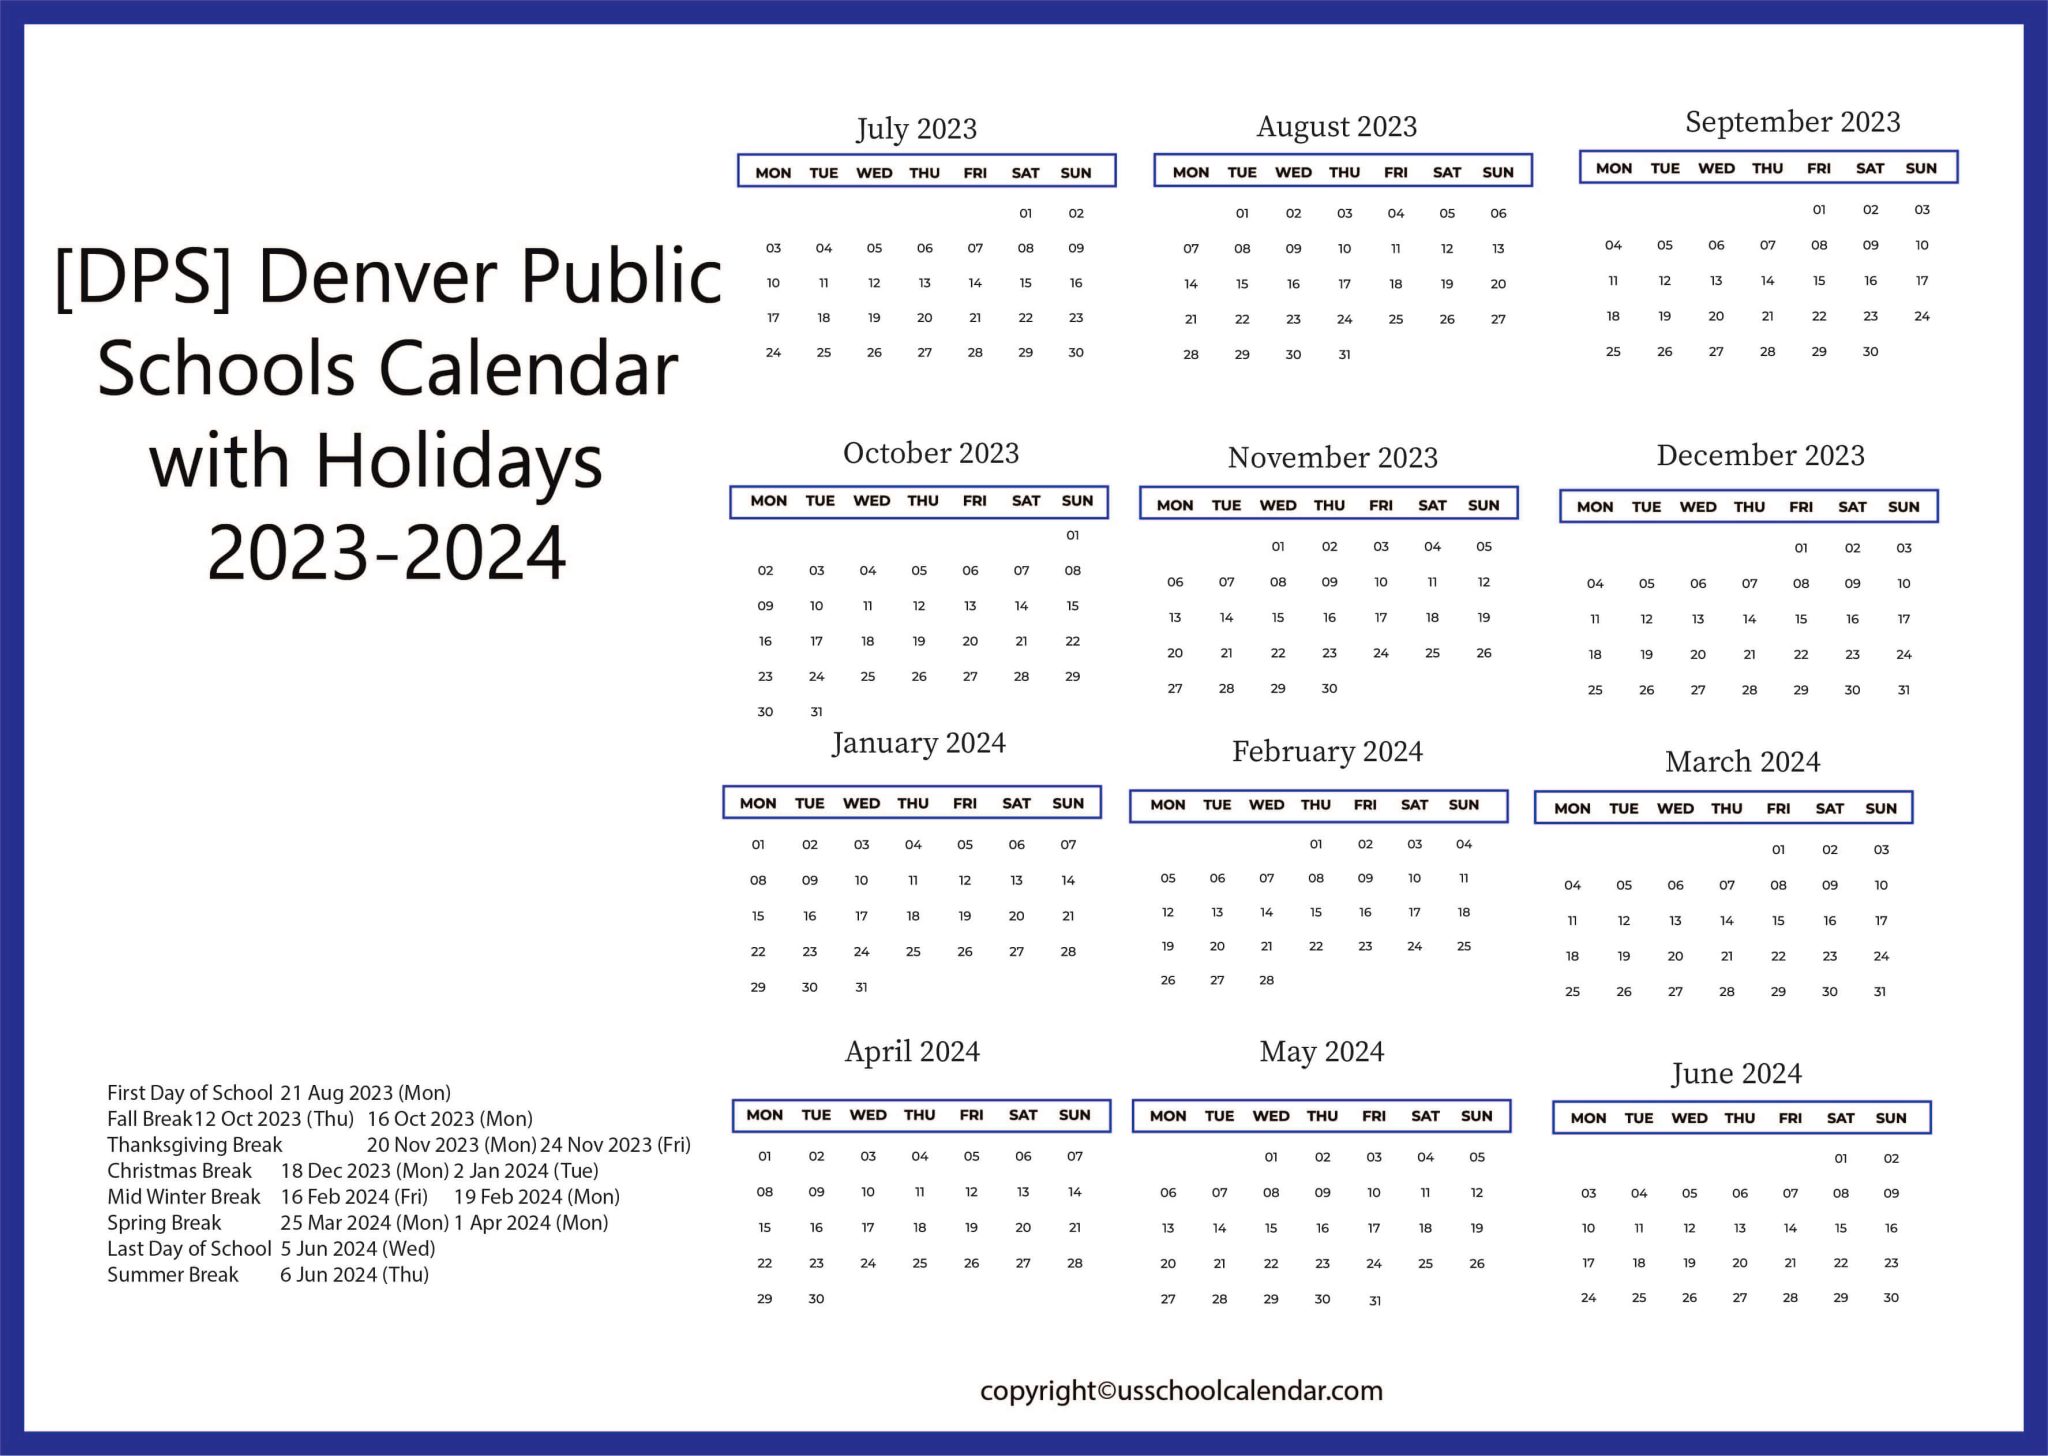 dps-denver-public-schools-calendar-with-holidays-2023-2024